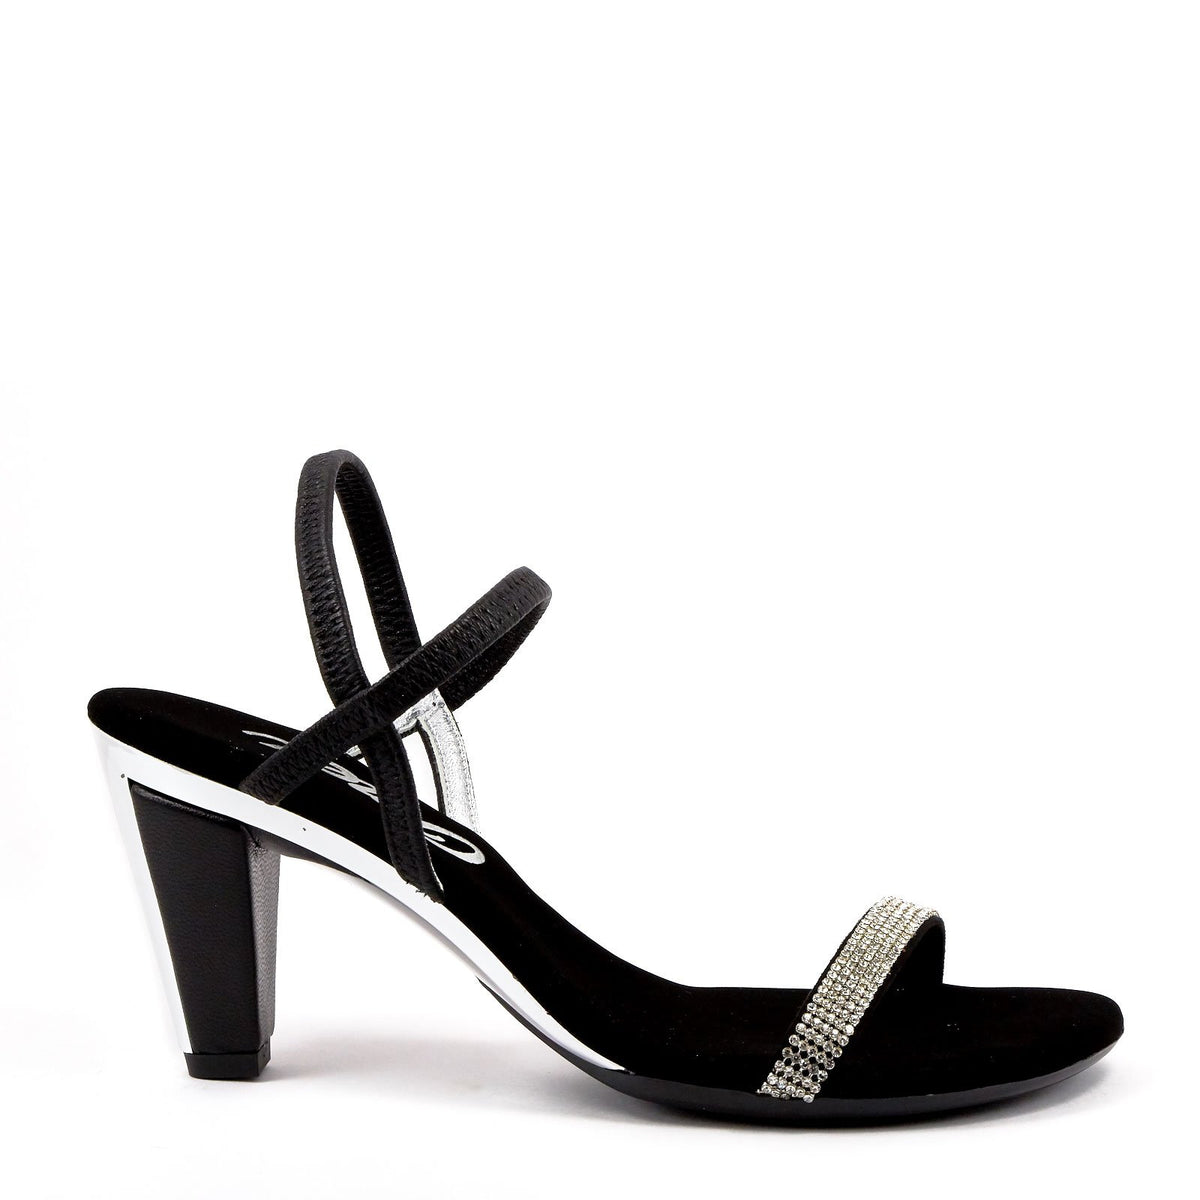 Tie-strap sandals - Black - Ladies | H&M IN